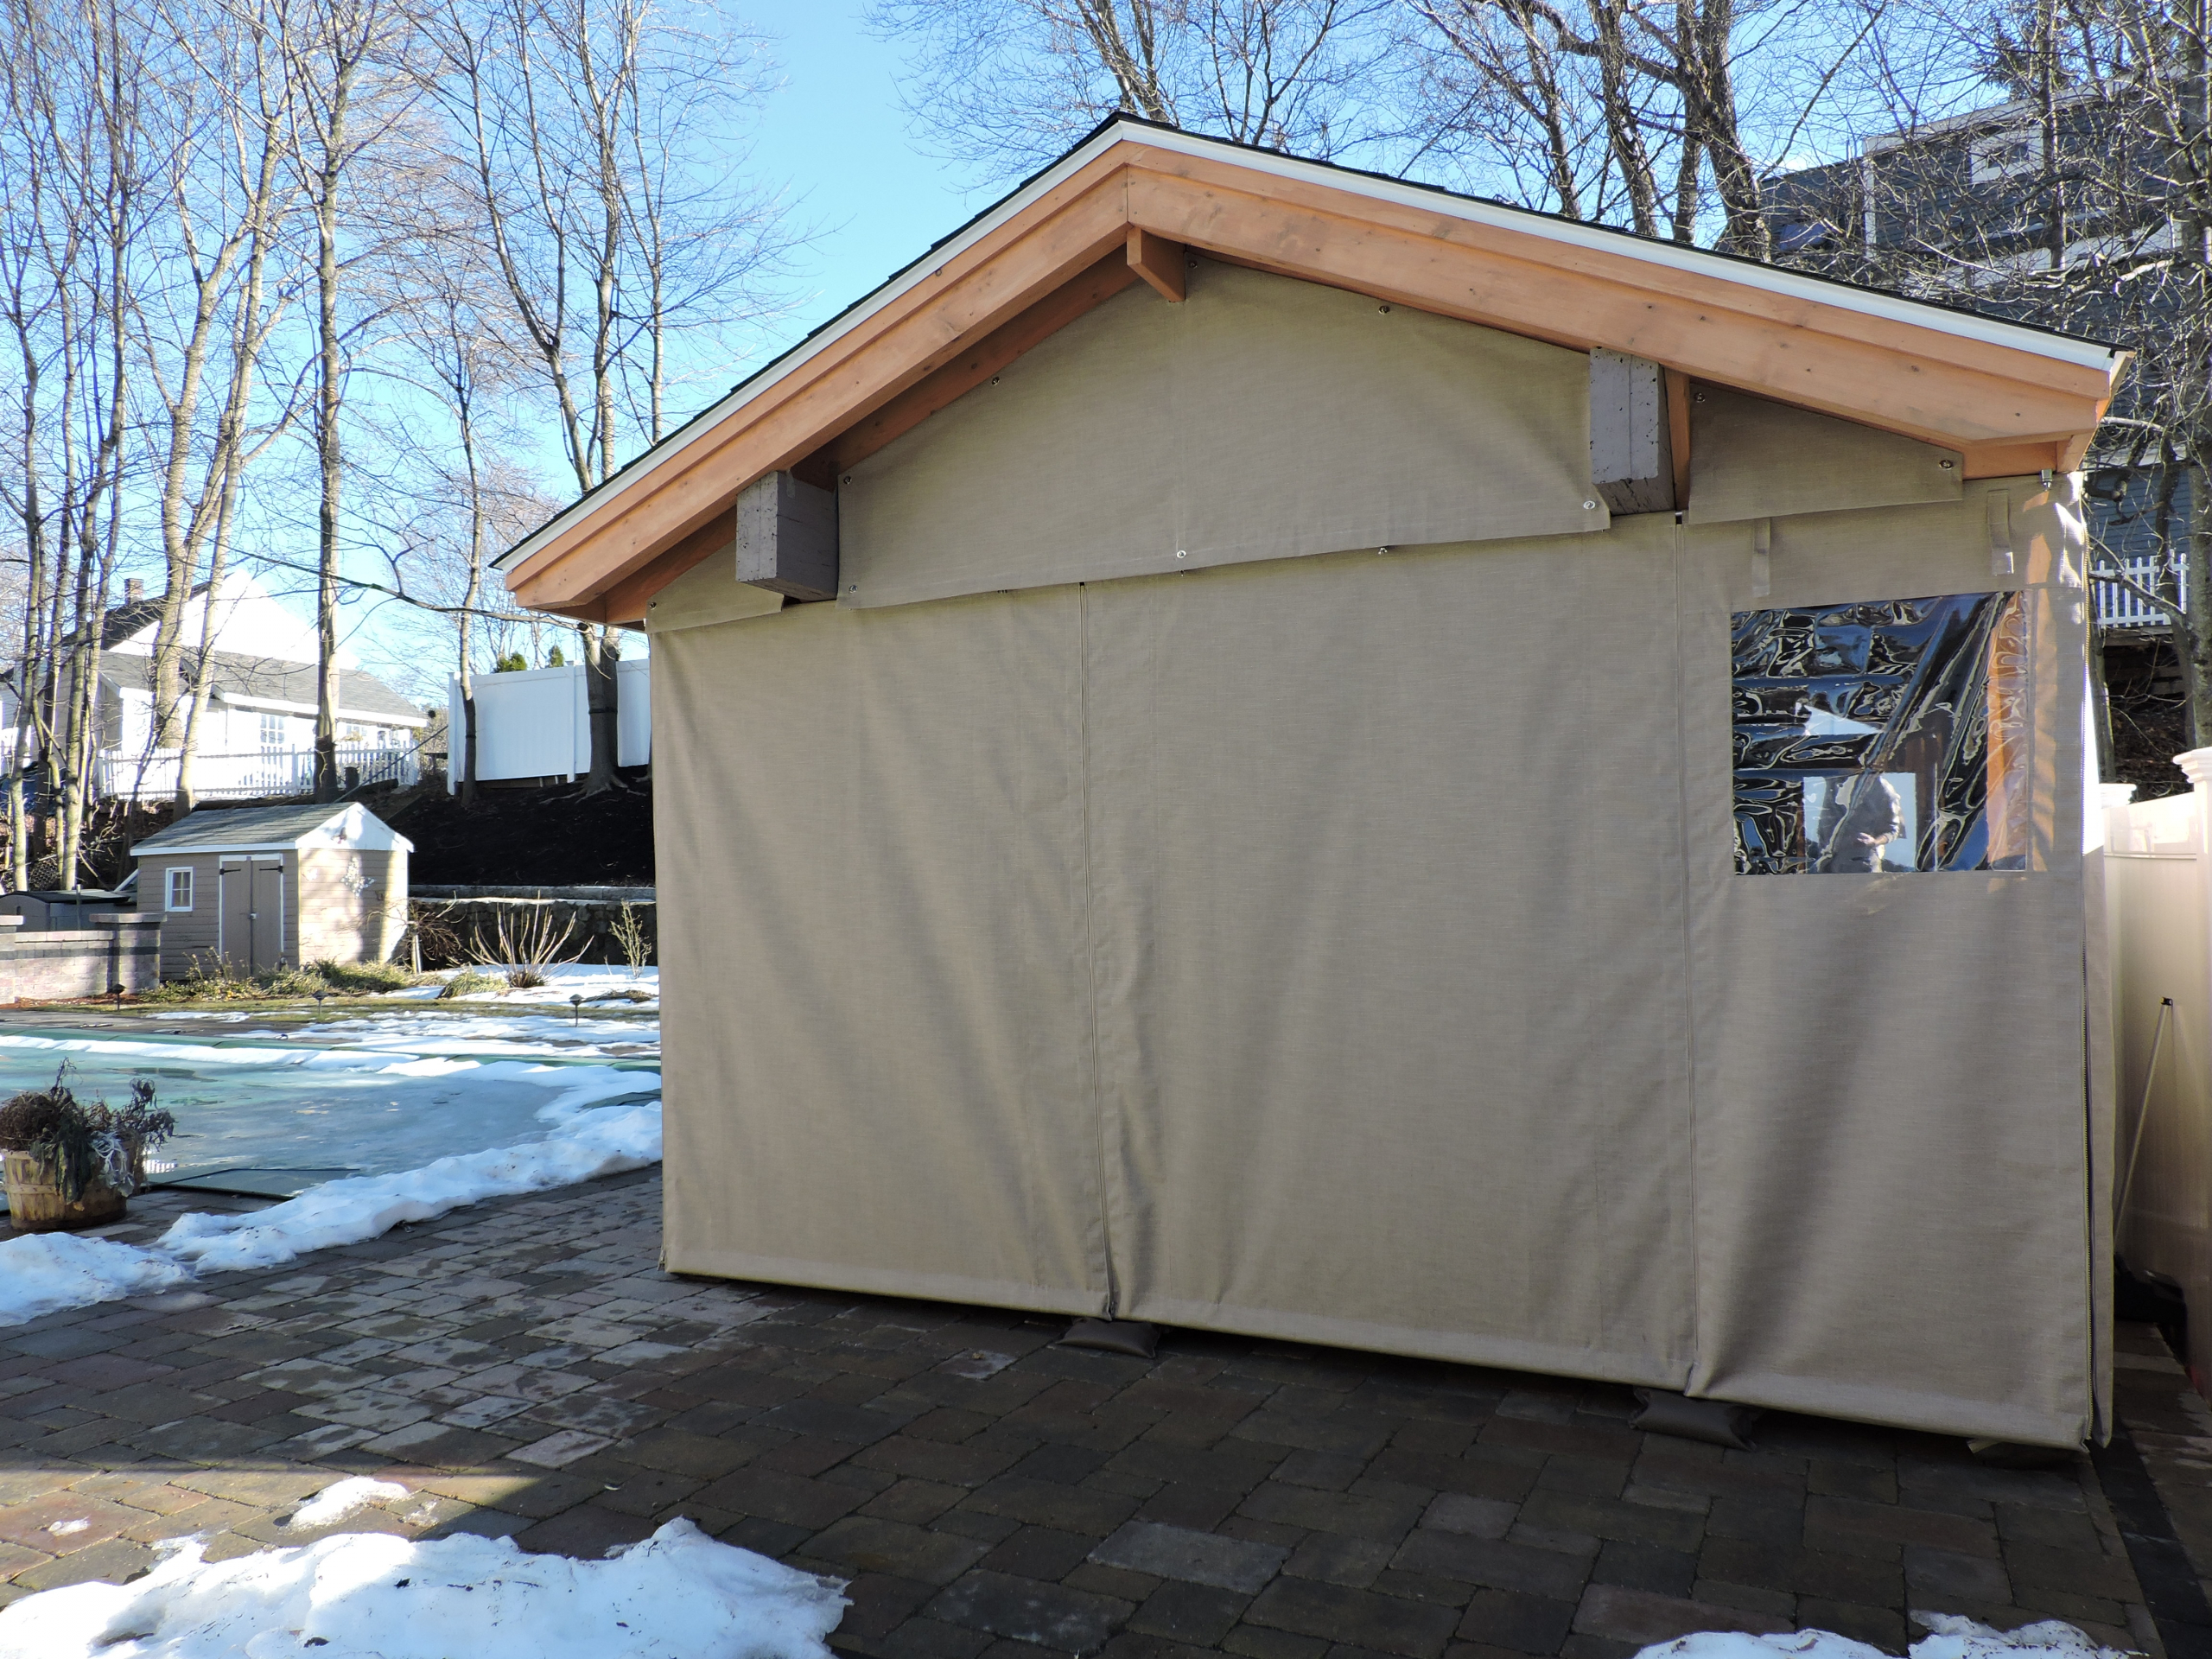 fabric enclosure for pool cabana at Boston home